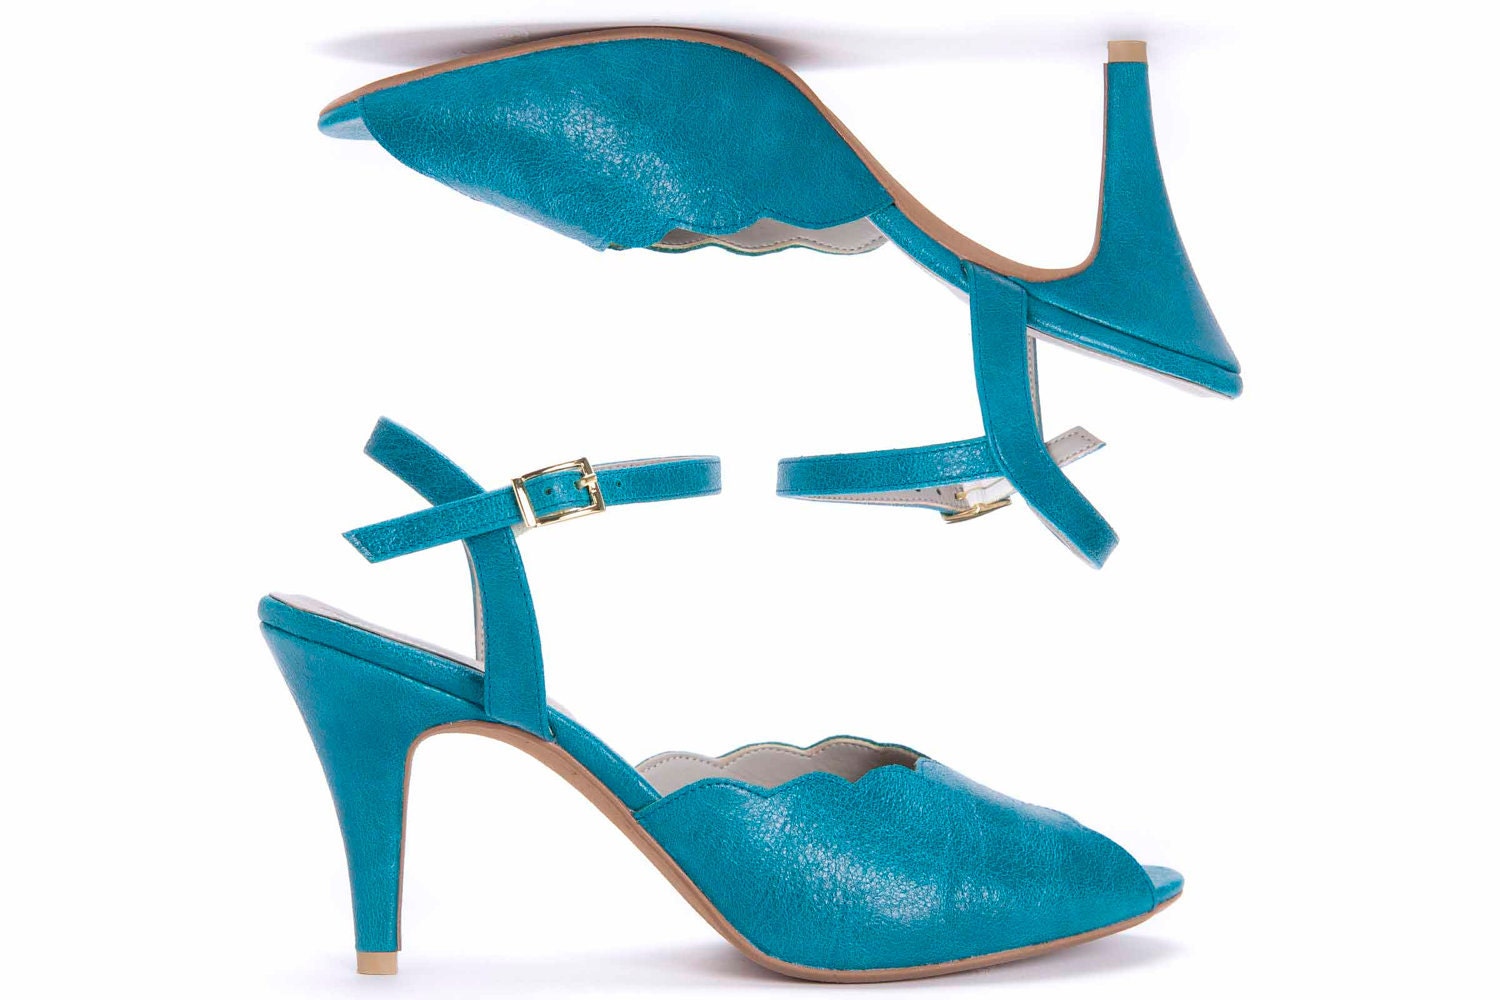 Roni Kantor Vintage inspired - ADINA high heel sandals - lagoon turquoise - FREE SHIPPING